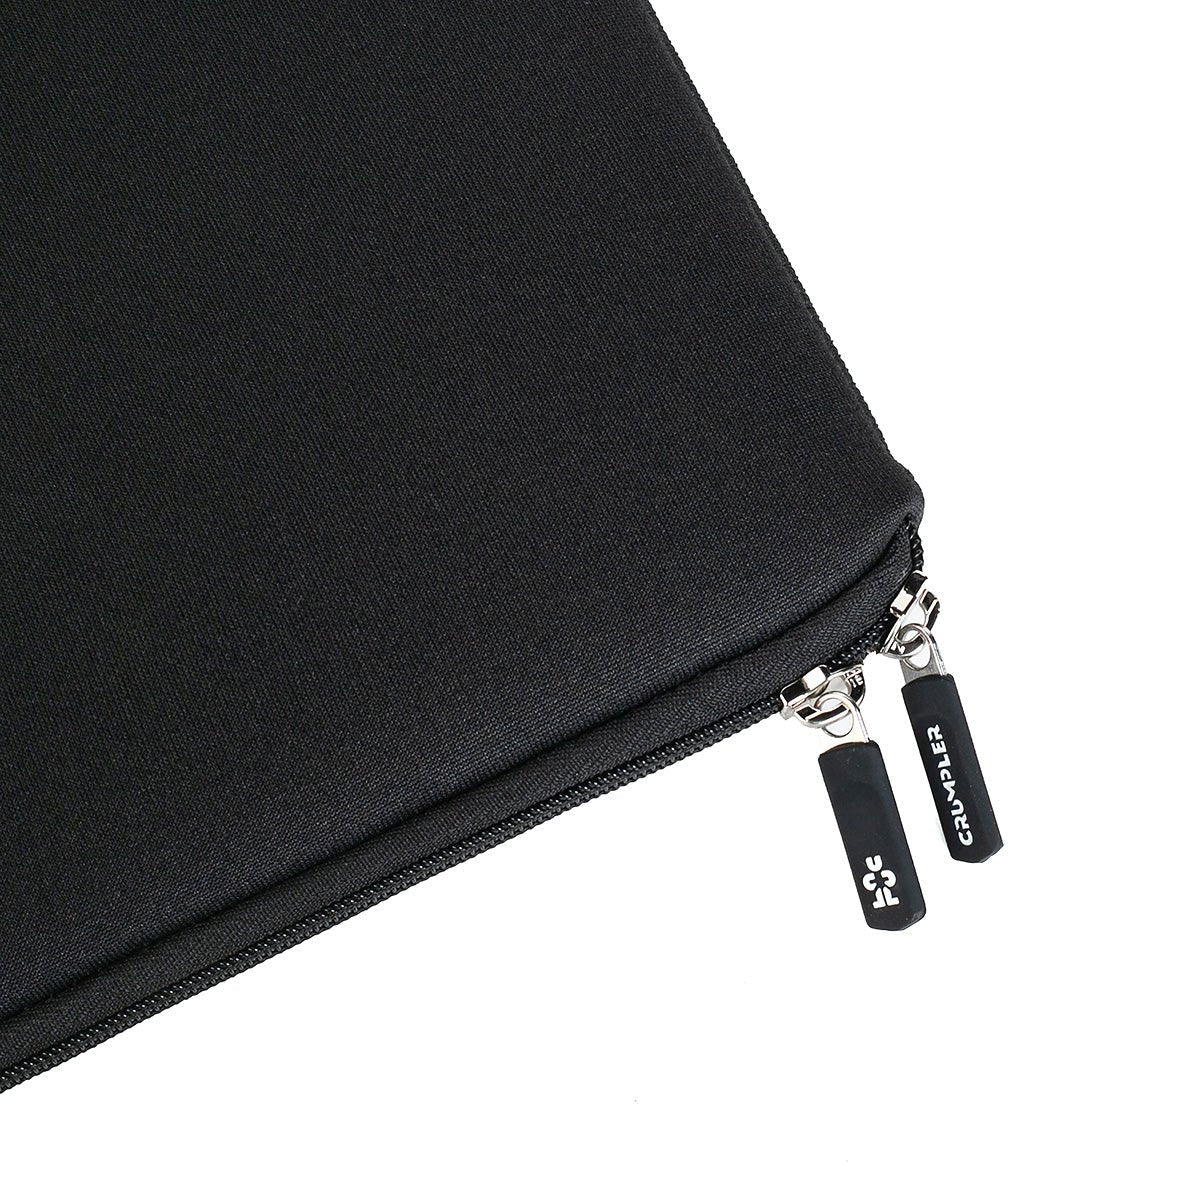 Crumpler Base Layer Laptop Sleeve Surface 15